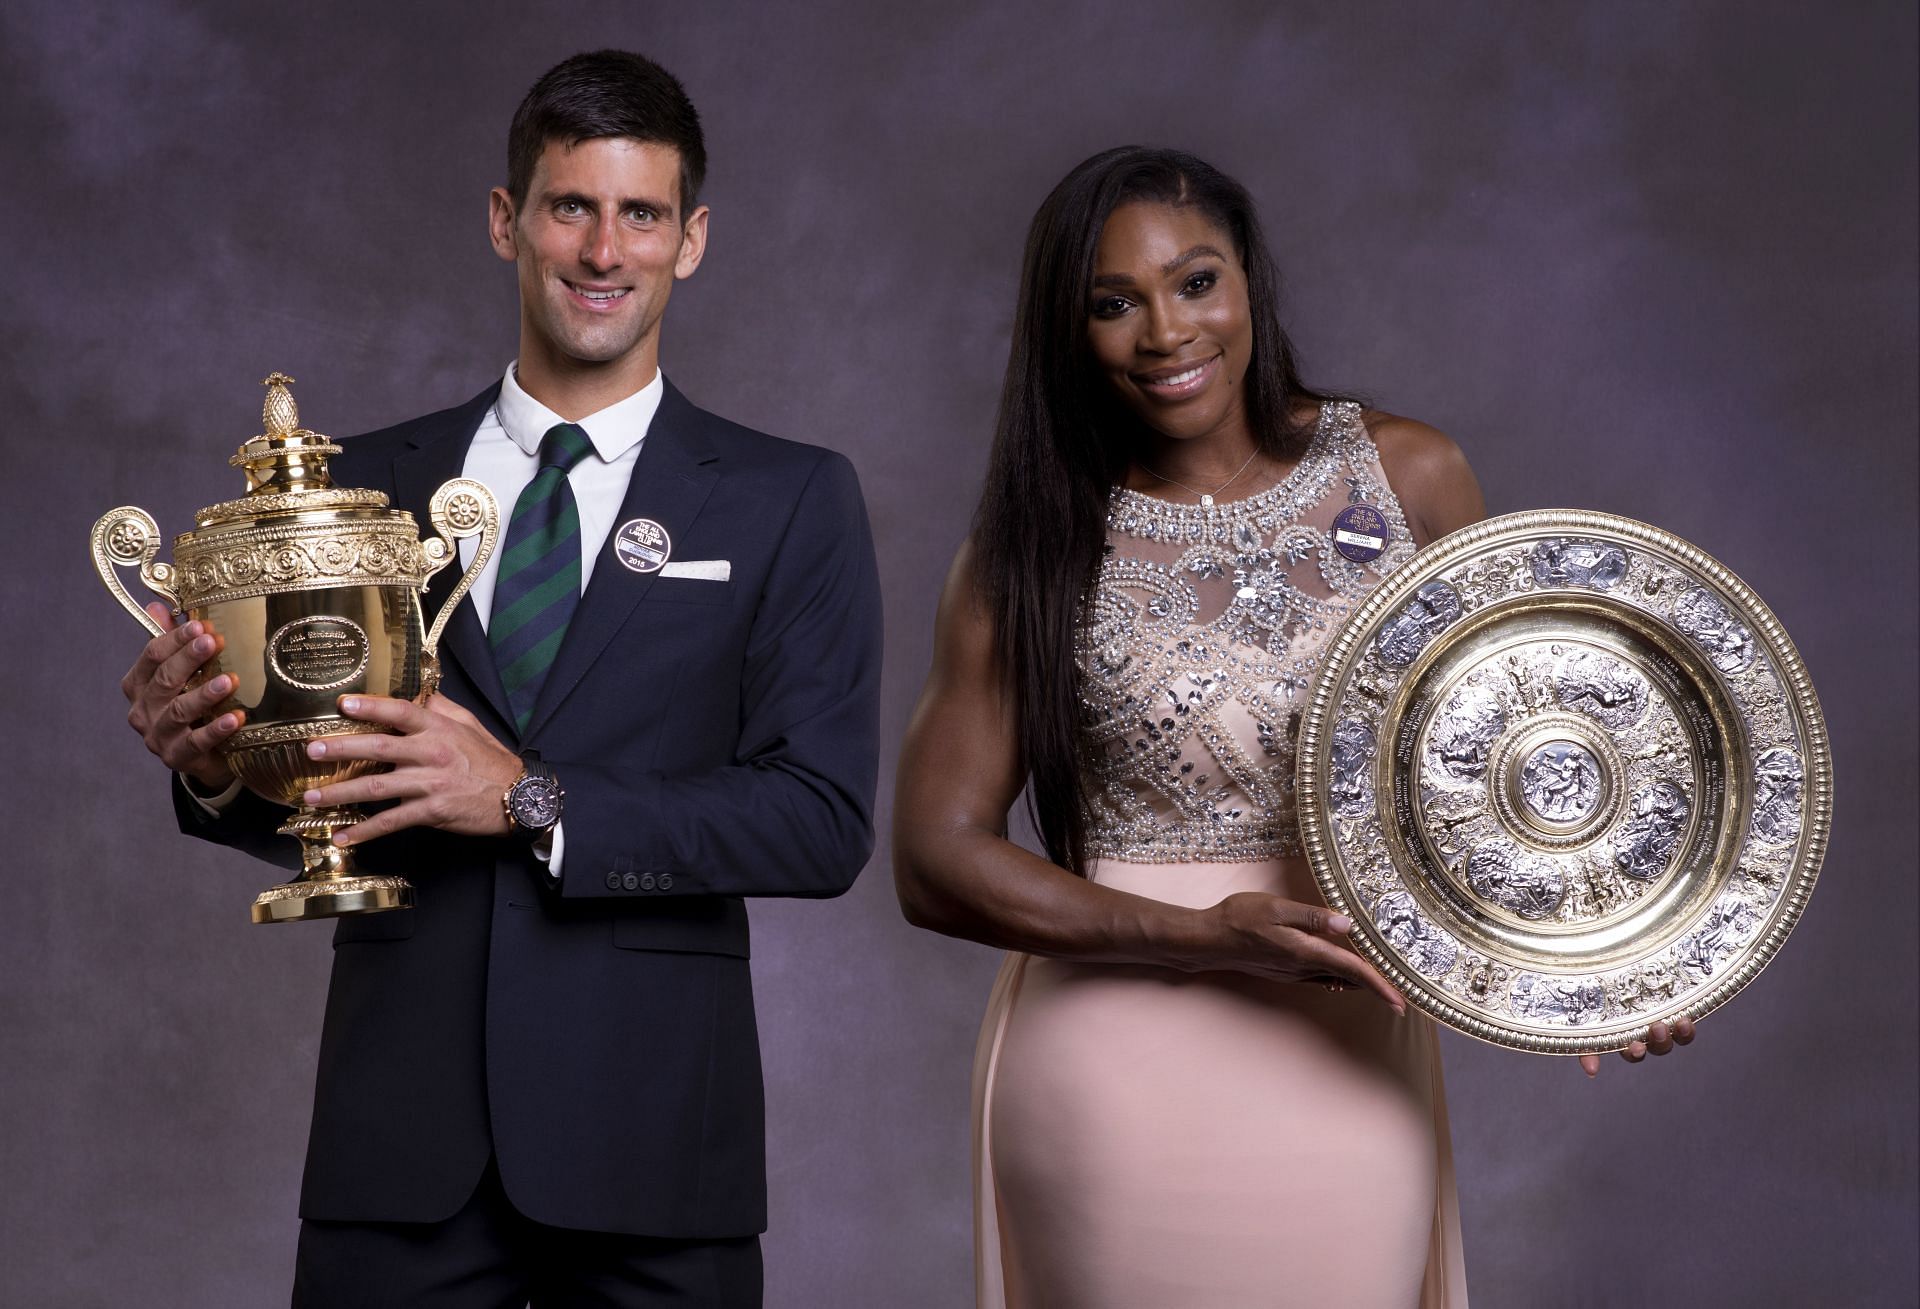 Novak Djokovic and Serena Williams at the Champions Dinner following the 2015 Wimbledon Championships